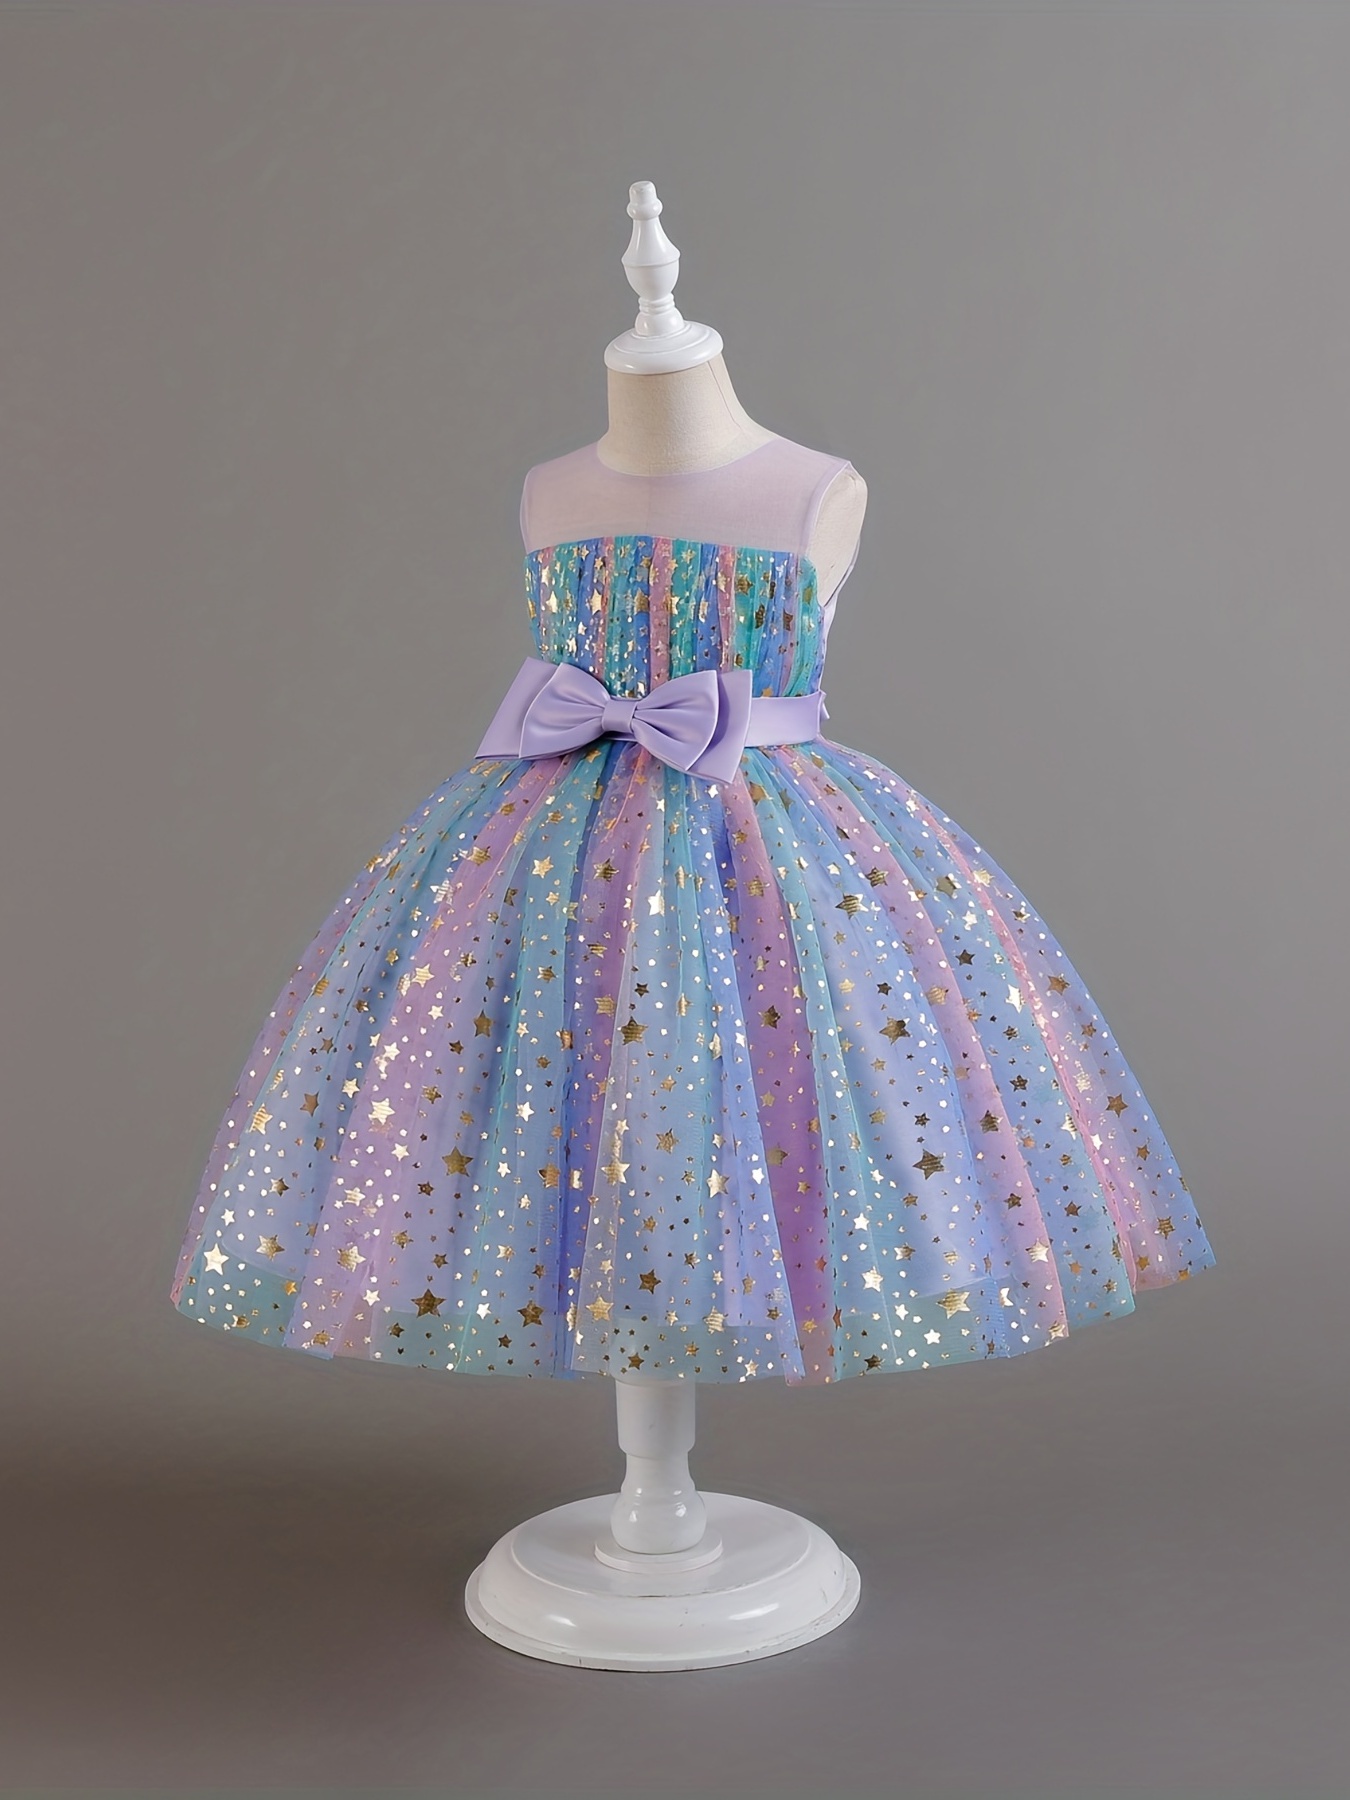 NIUREDLTD Colorful Sleeveless Princess Tulle Dress Kids' Sleeveless Rainbow  Tulle Dress 110 